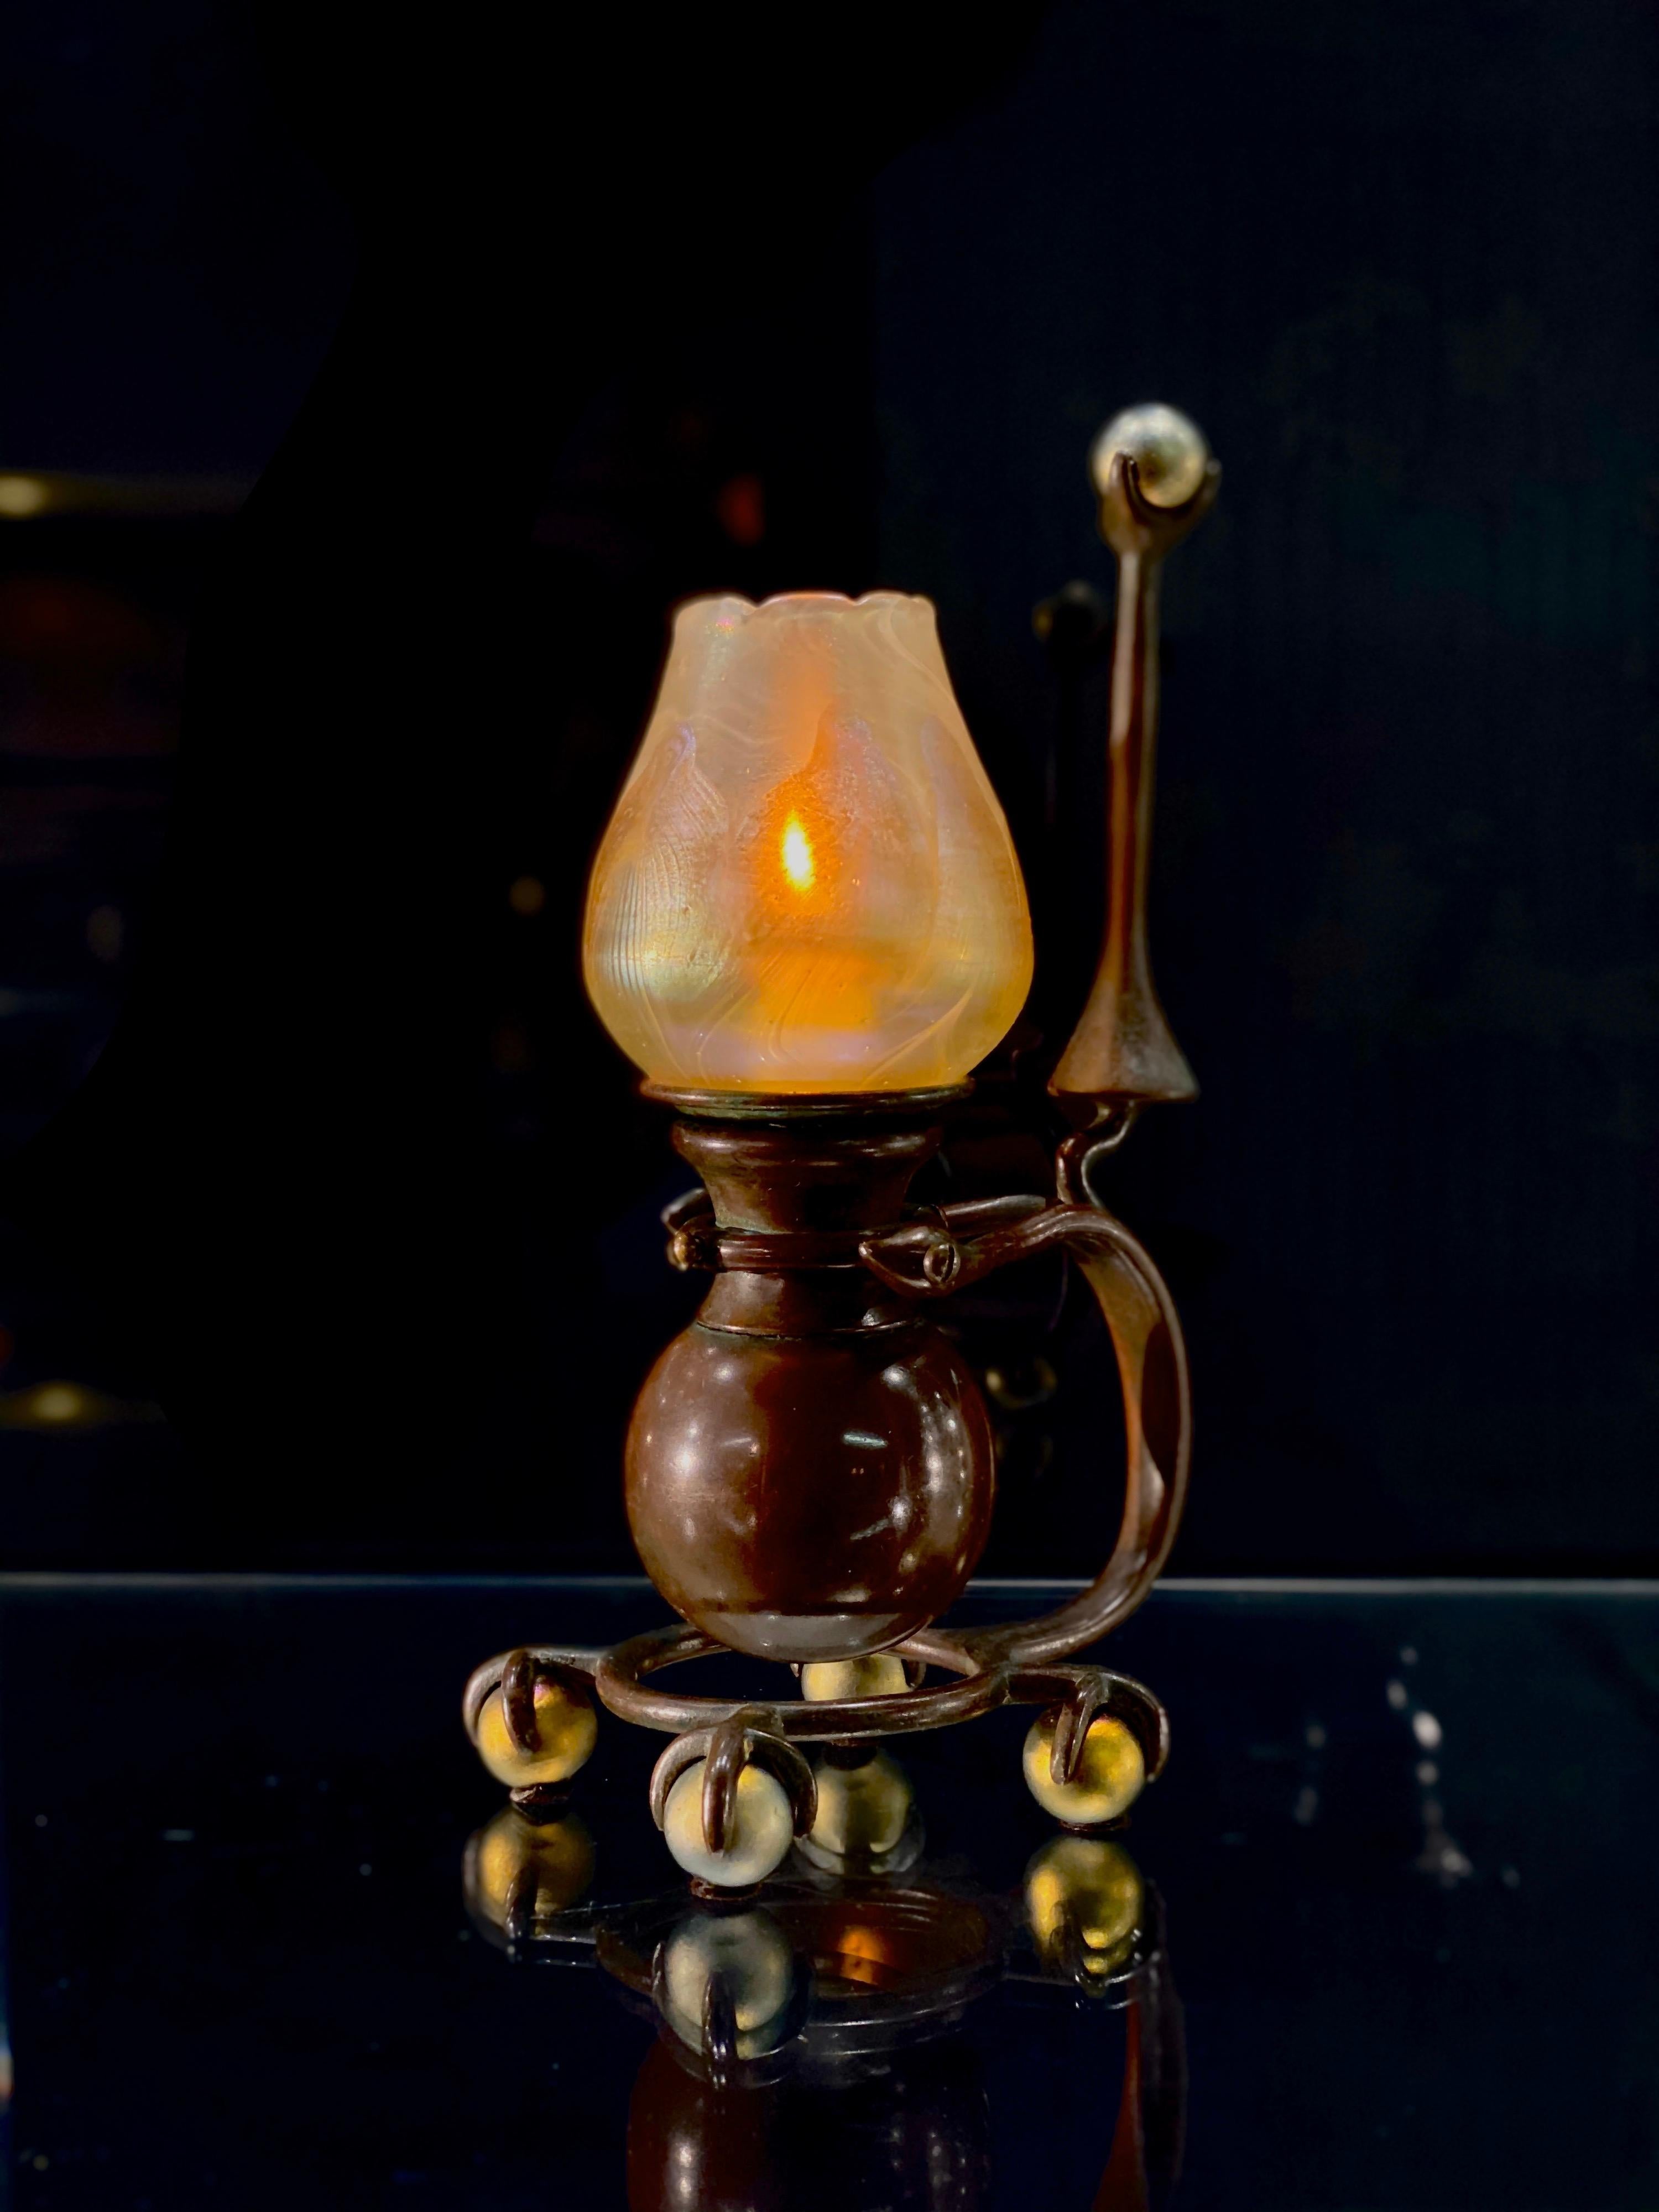 Cast American Art Nouveau “Gimbal” Candlestick by Tiffany Studios